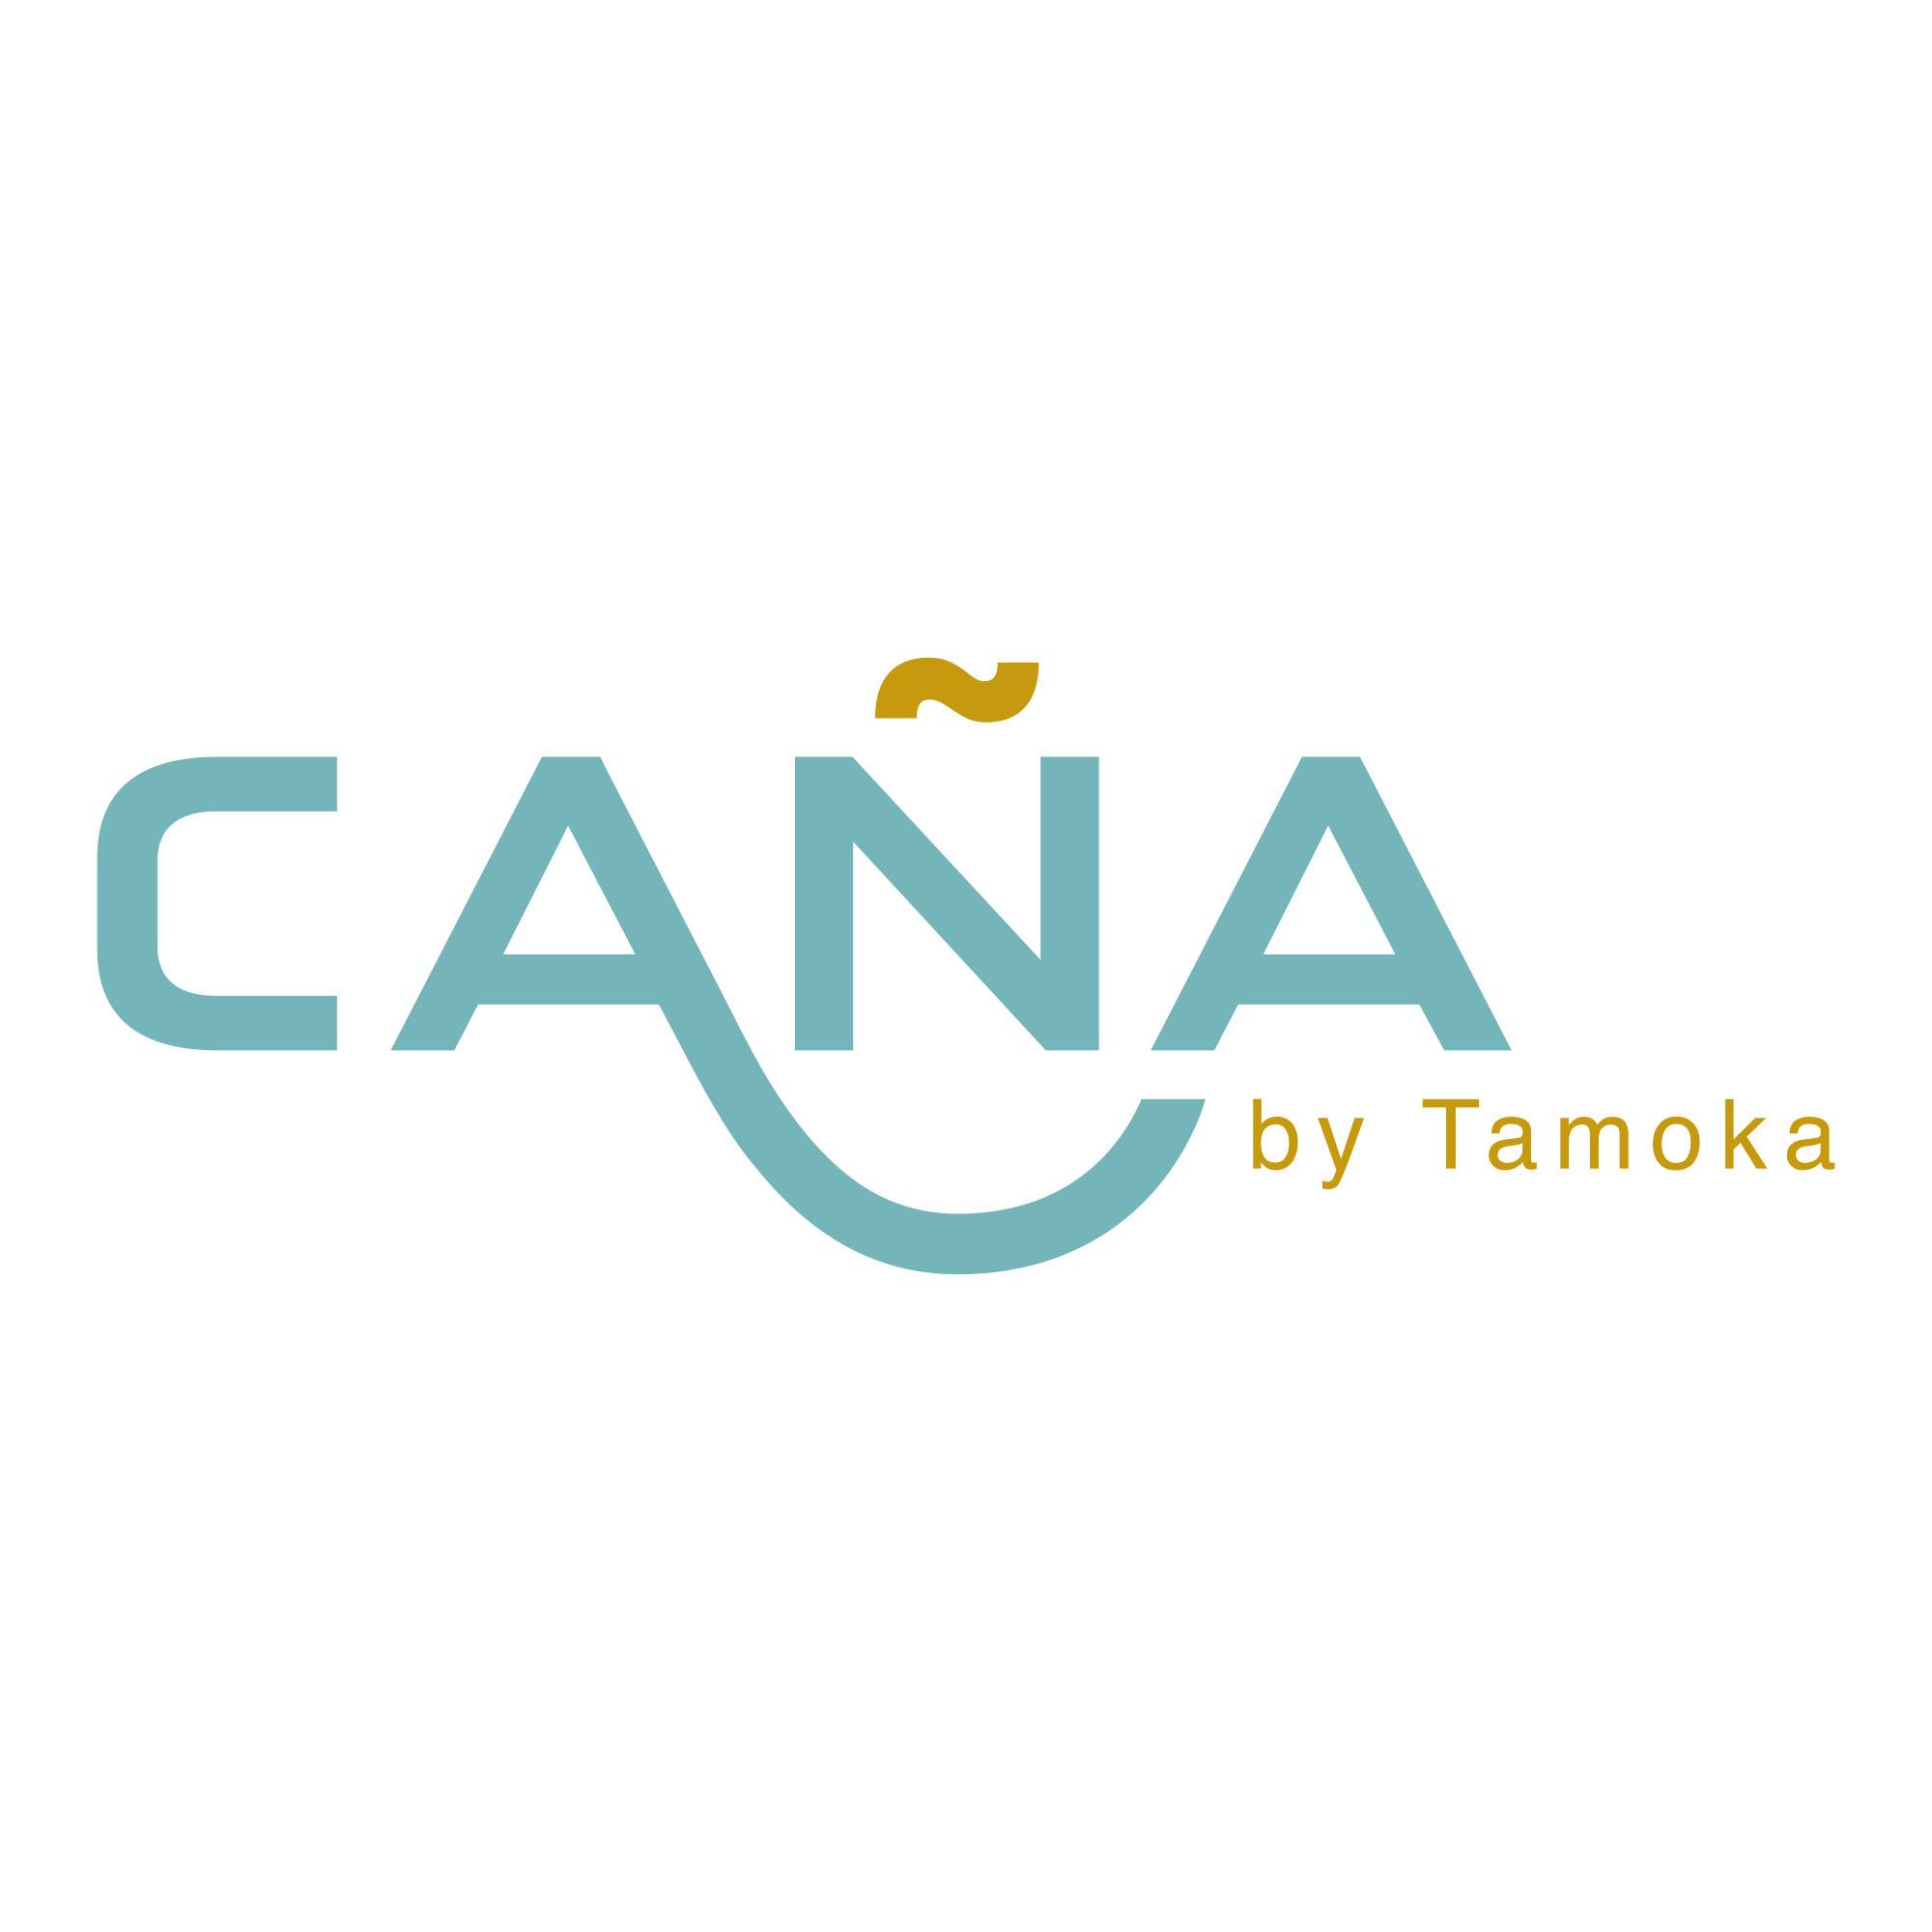 Caña by Tamoka